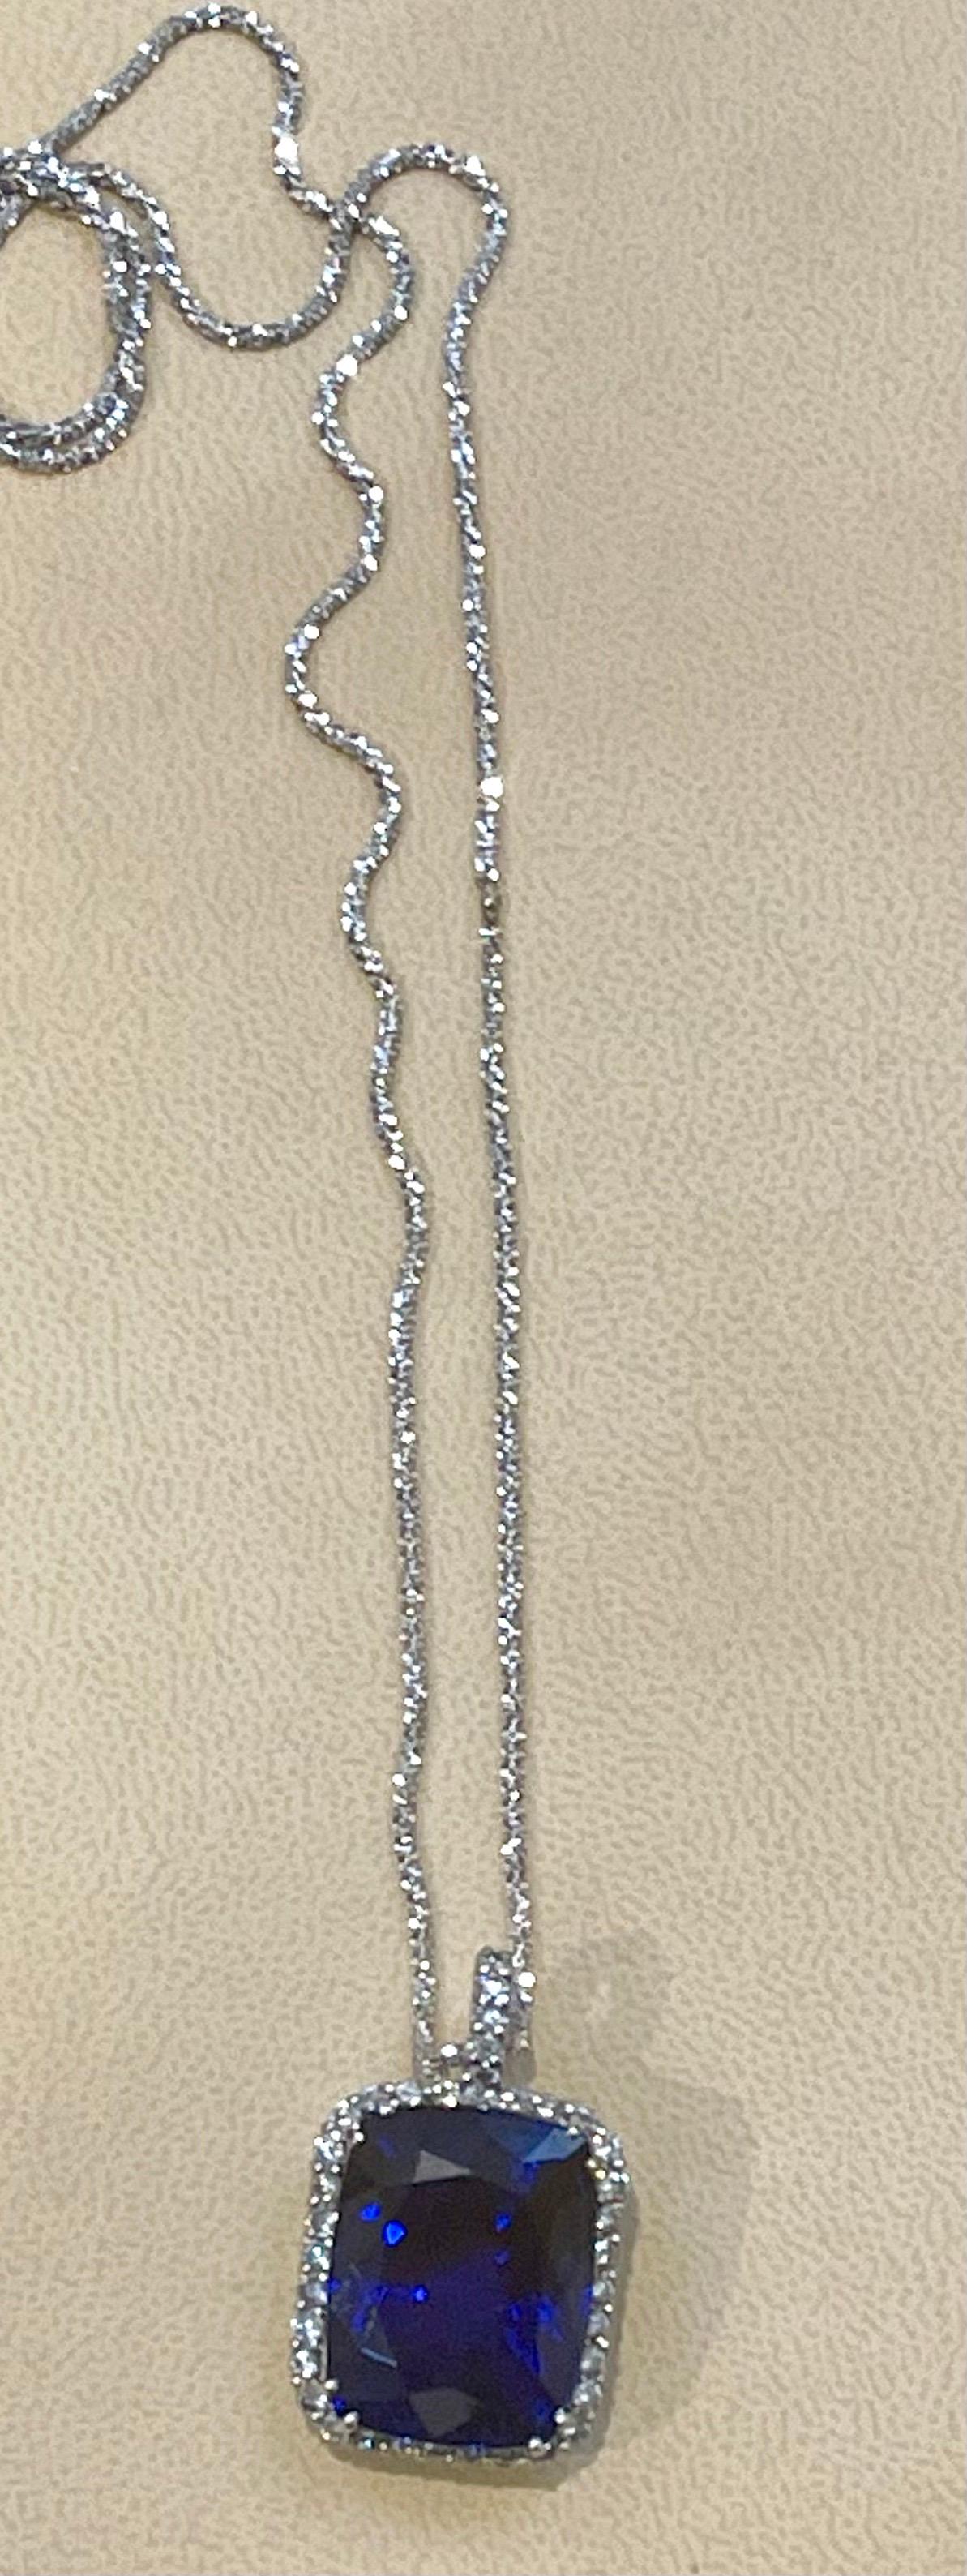 37.5 Carat Tanzanite Necklace & Diamond Pendant with Chain 14 Karat White Gold For Sale 10